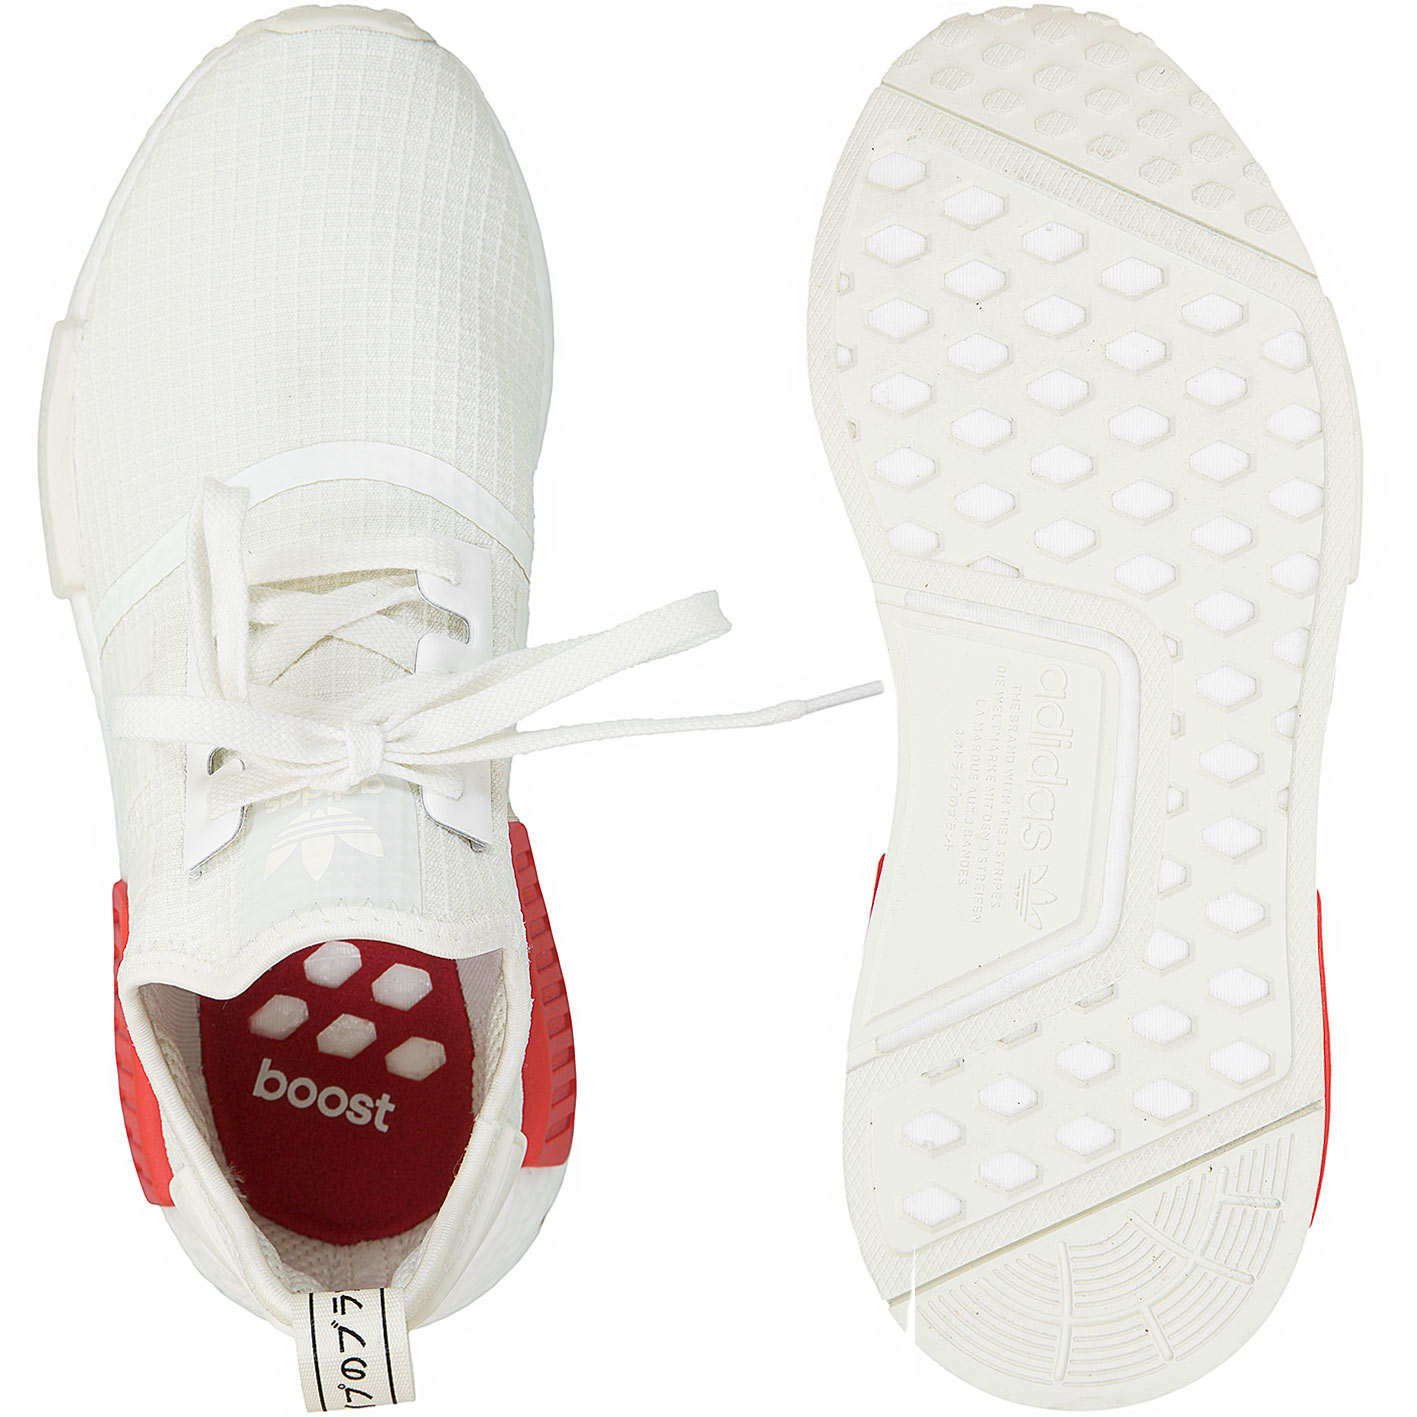 ☆ Adidas Originals Sneaker NMD R1 weiß/rot - hier bestellen!